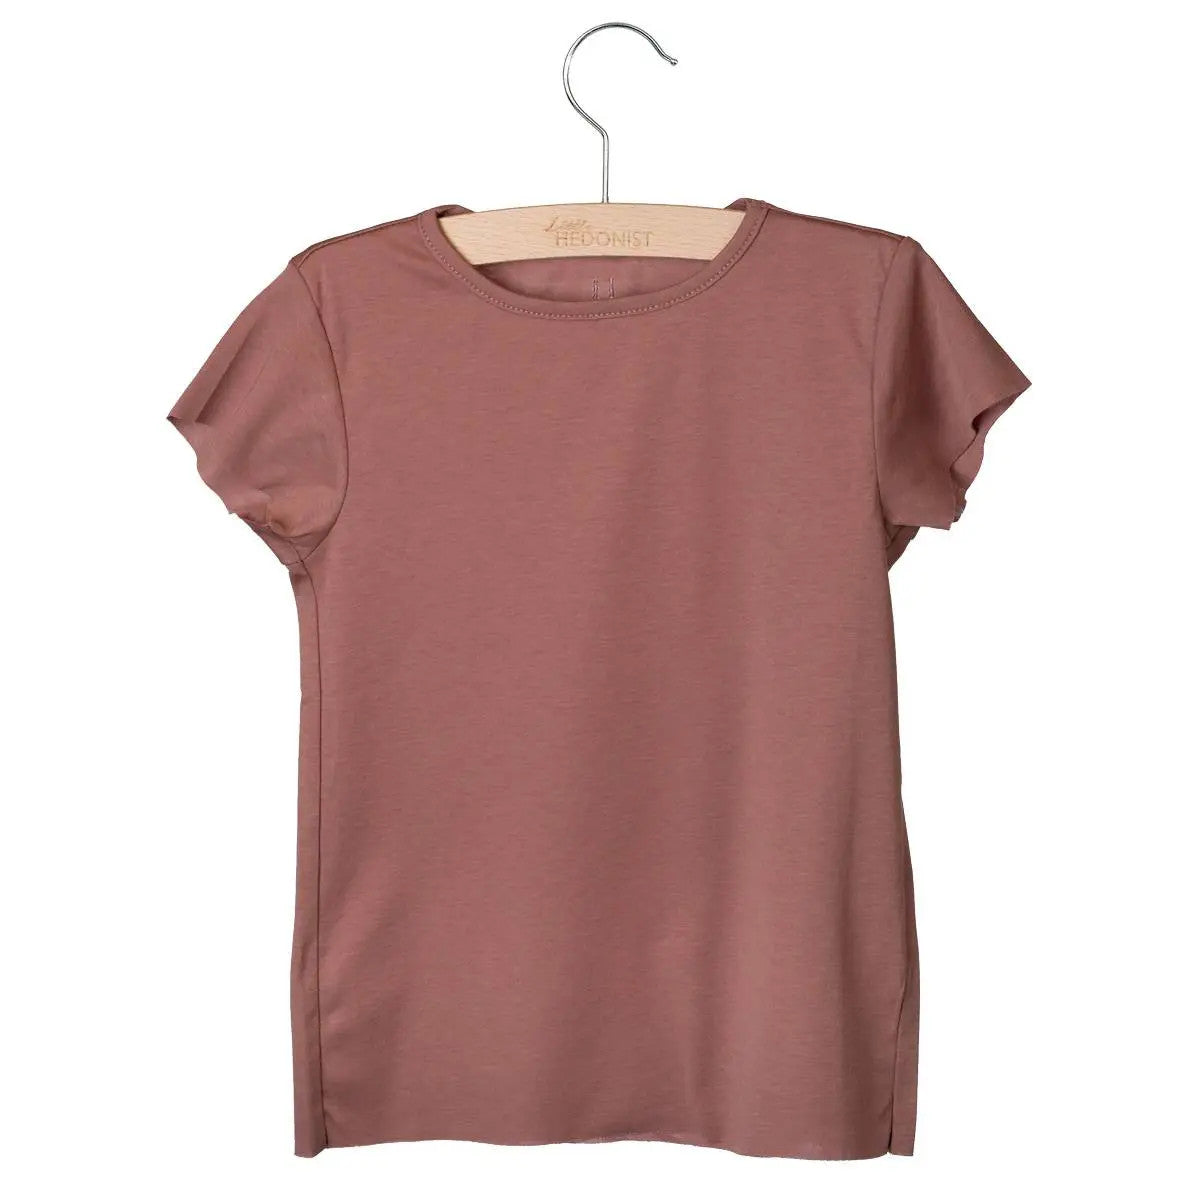 Little Hedonist unisex organic cotton t-shirt in Burlwood Pink